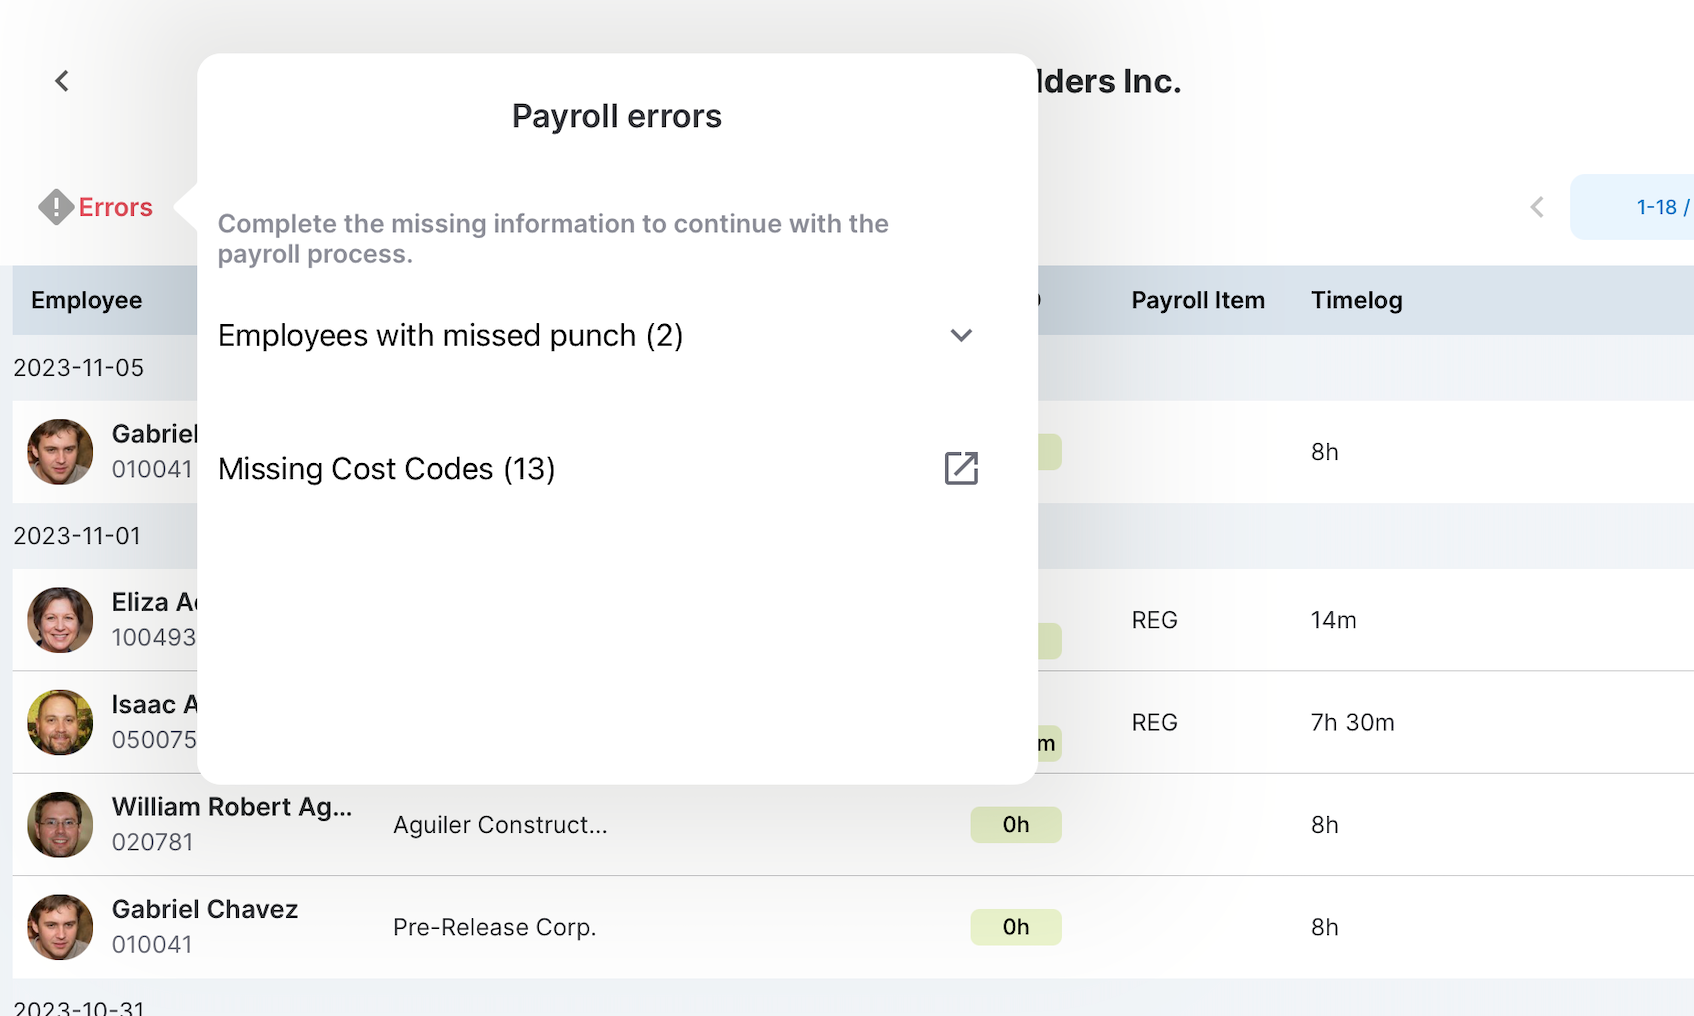 Payroll error details